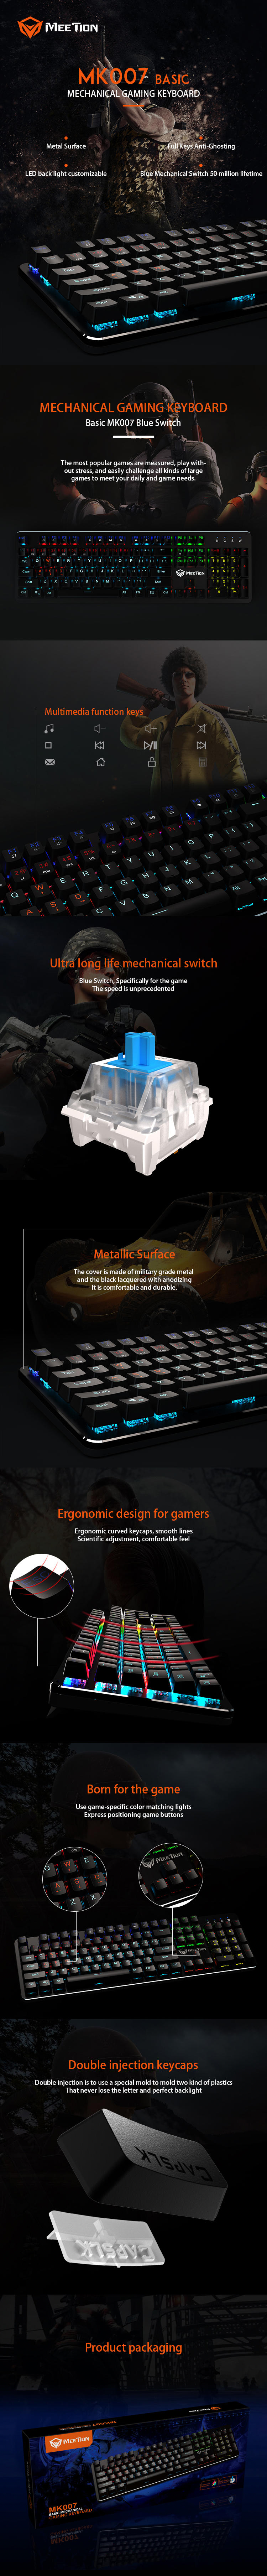 wholesale the best gaming keyboard retailer-1